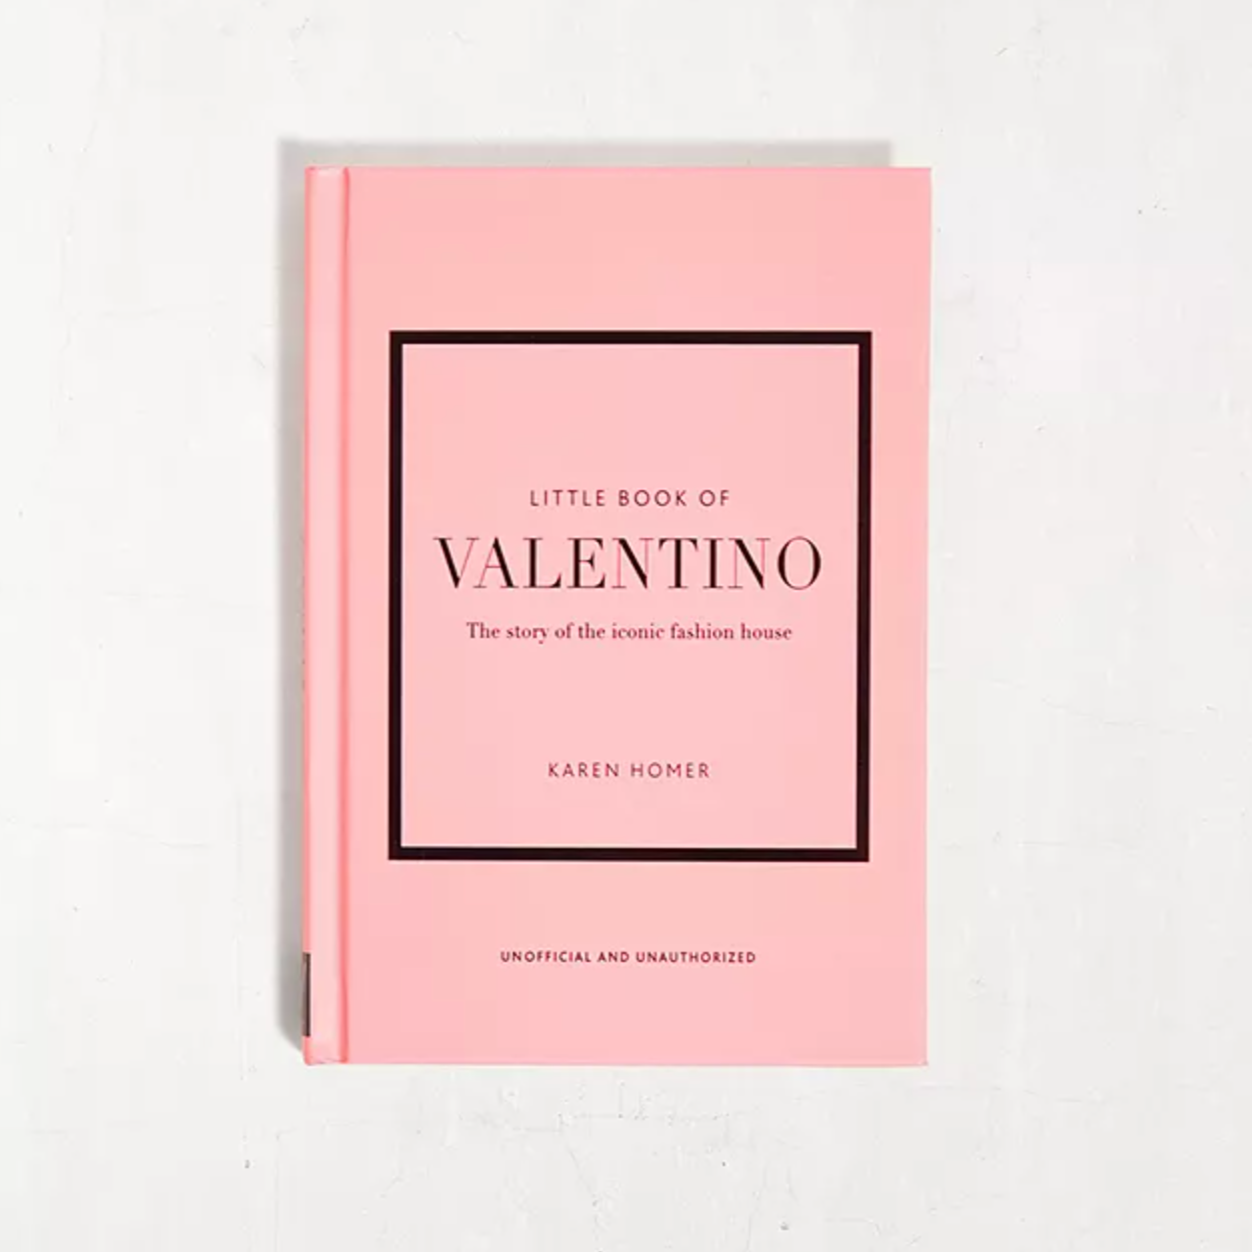 Little Book of Valentino.